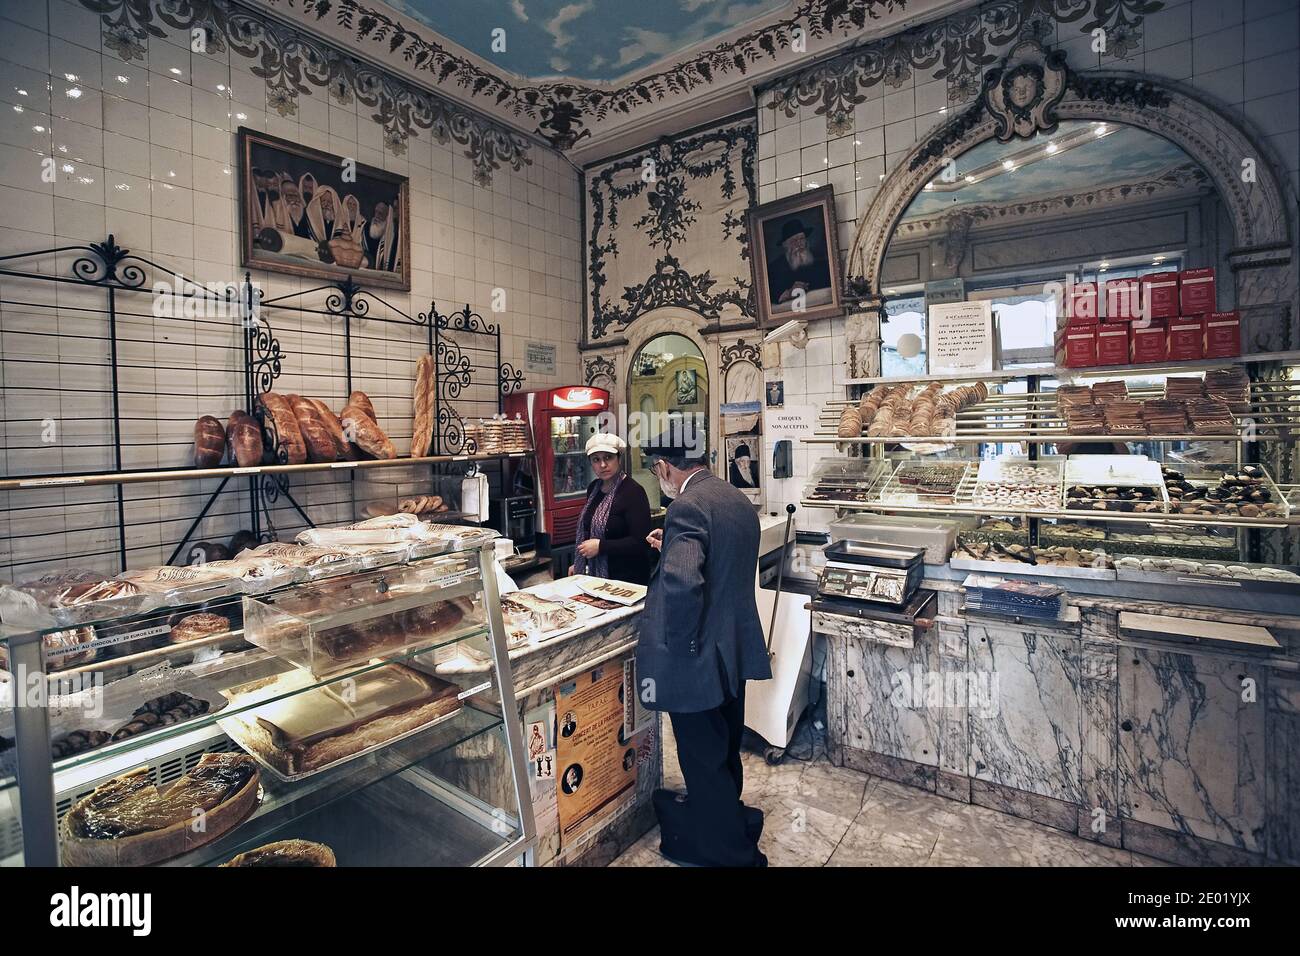 FRANCE / IIe-de-France/Paris/ Le Marais/ Small local Bakery or Boulangerie  in Paris Stock Photo - Alamy